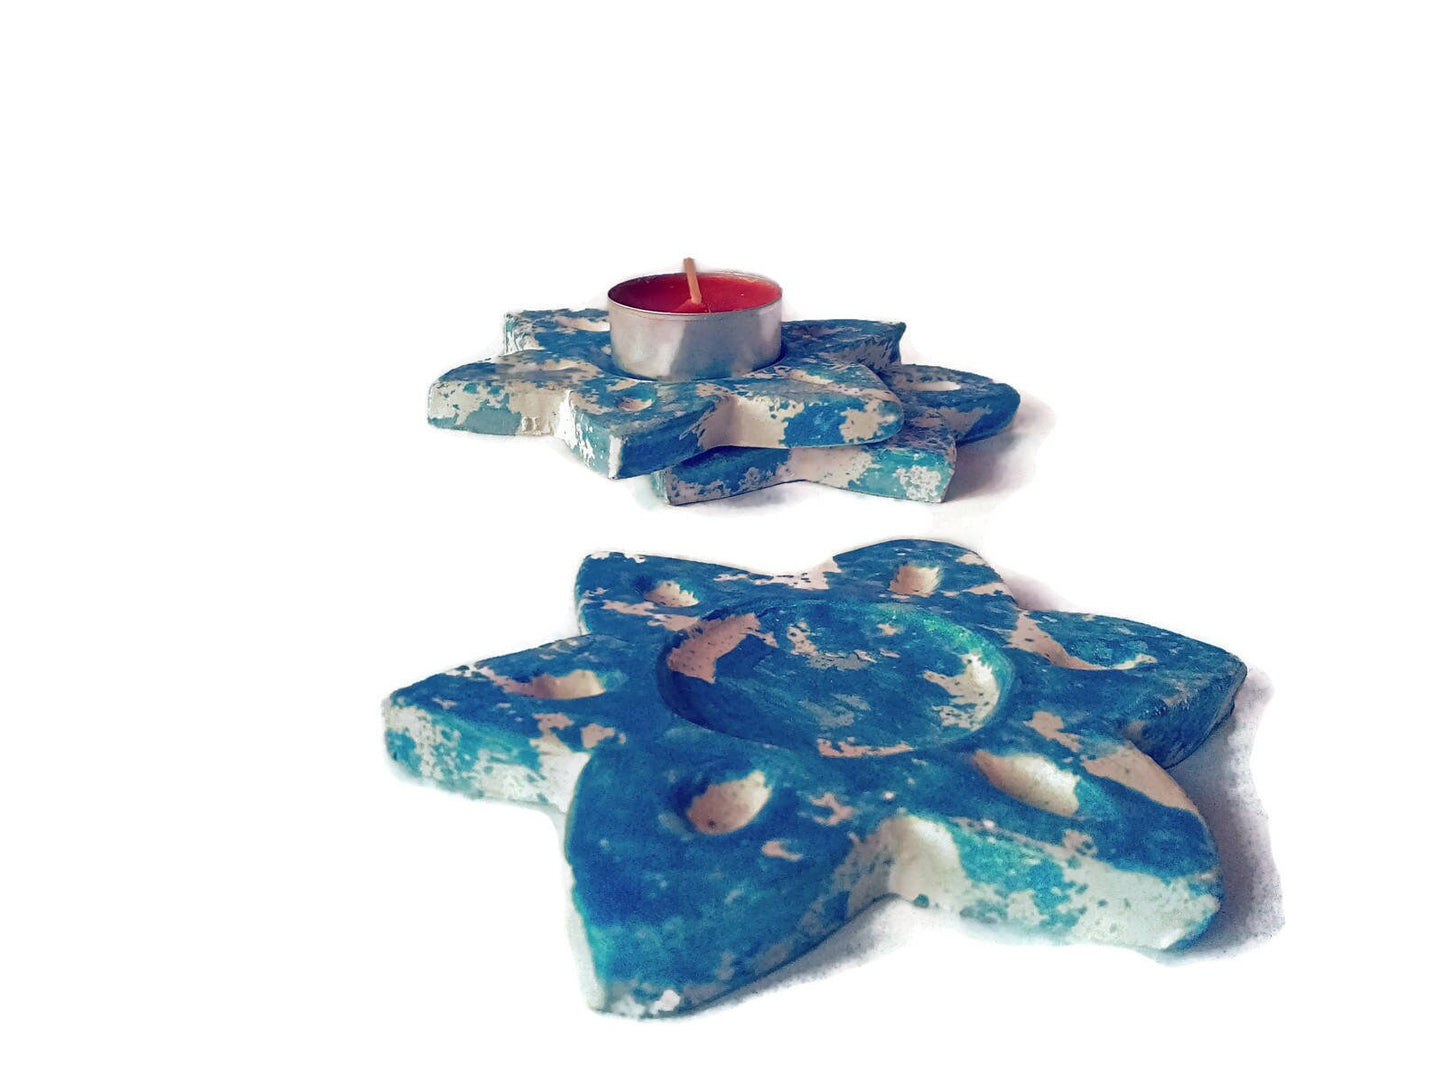 Handmade Ceramic Star Candle Holder For Home Decor, Office Desk Accessories For Her, Artisan Pottery Tealight Holder, Gift Idea For Women - Ceramica Ana Rafael